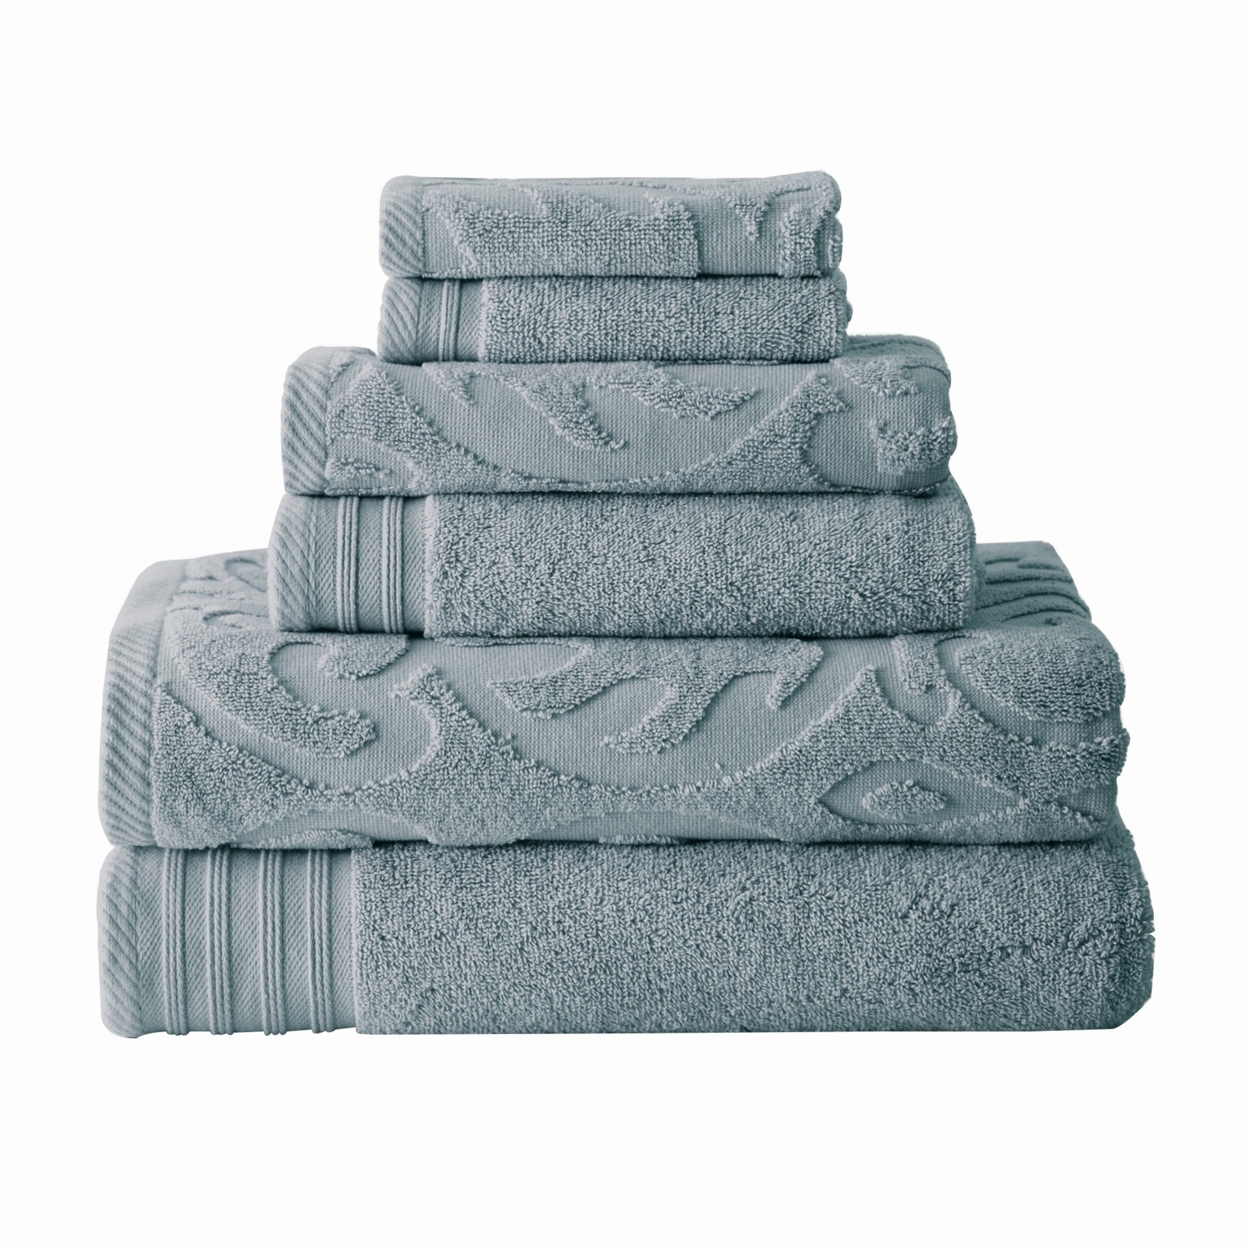 Oya 6 Piece Soft Egyptian Cotton Towel Set, Medallion Pattern, Blue Gray- Saltoro Sherpi